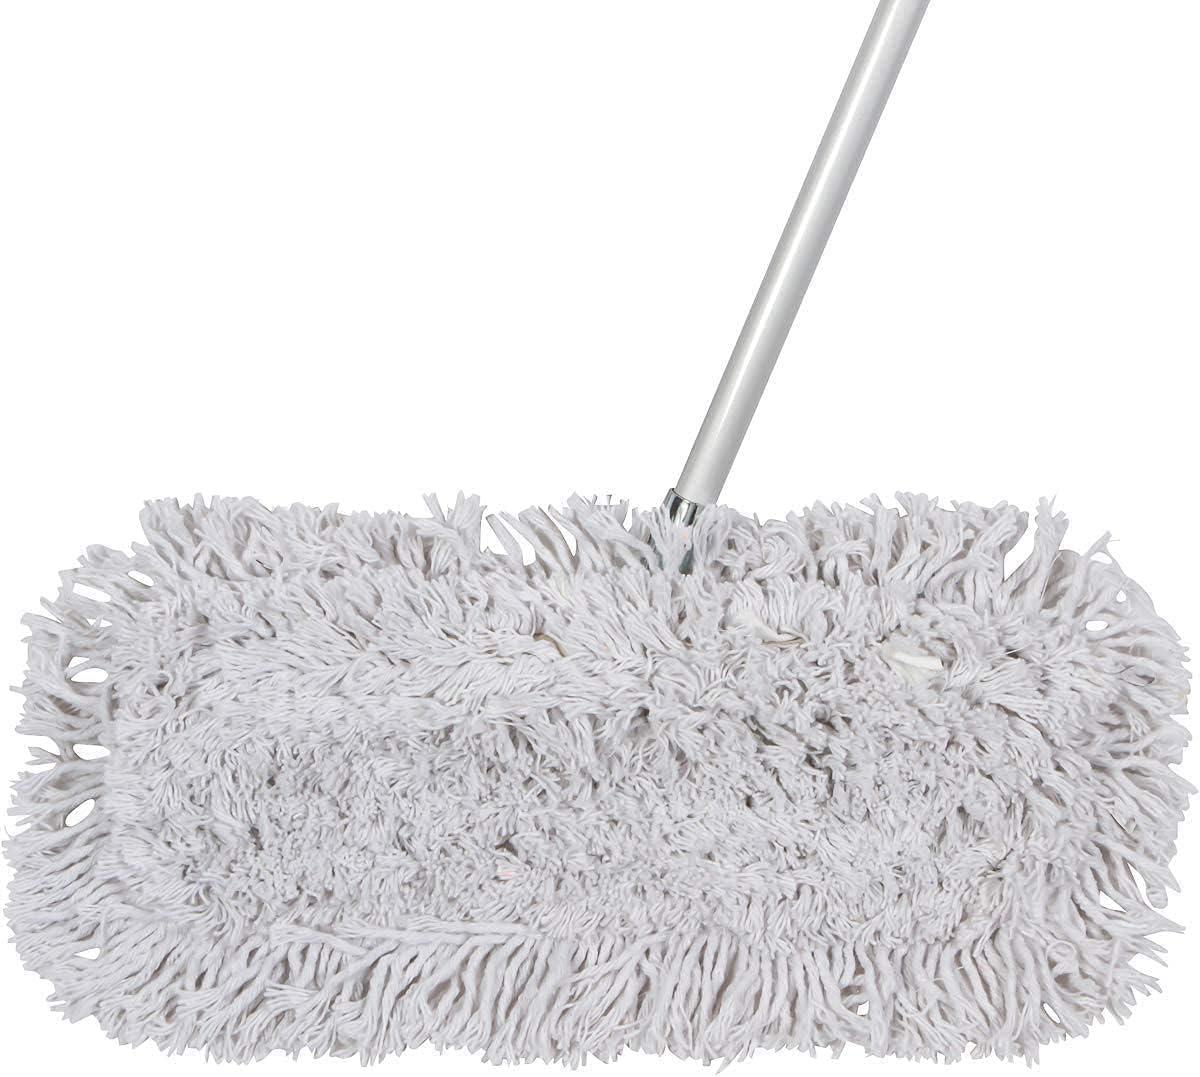 Tidy Tools Commercial Dust Mop & Floor Sweeper, 48 in. Dust Mop for Hardwood Floors, Reusable Dust Mop Head, Extendable Mop Handle, Industrial Dry